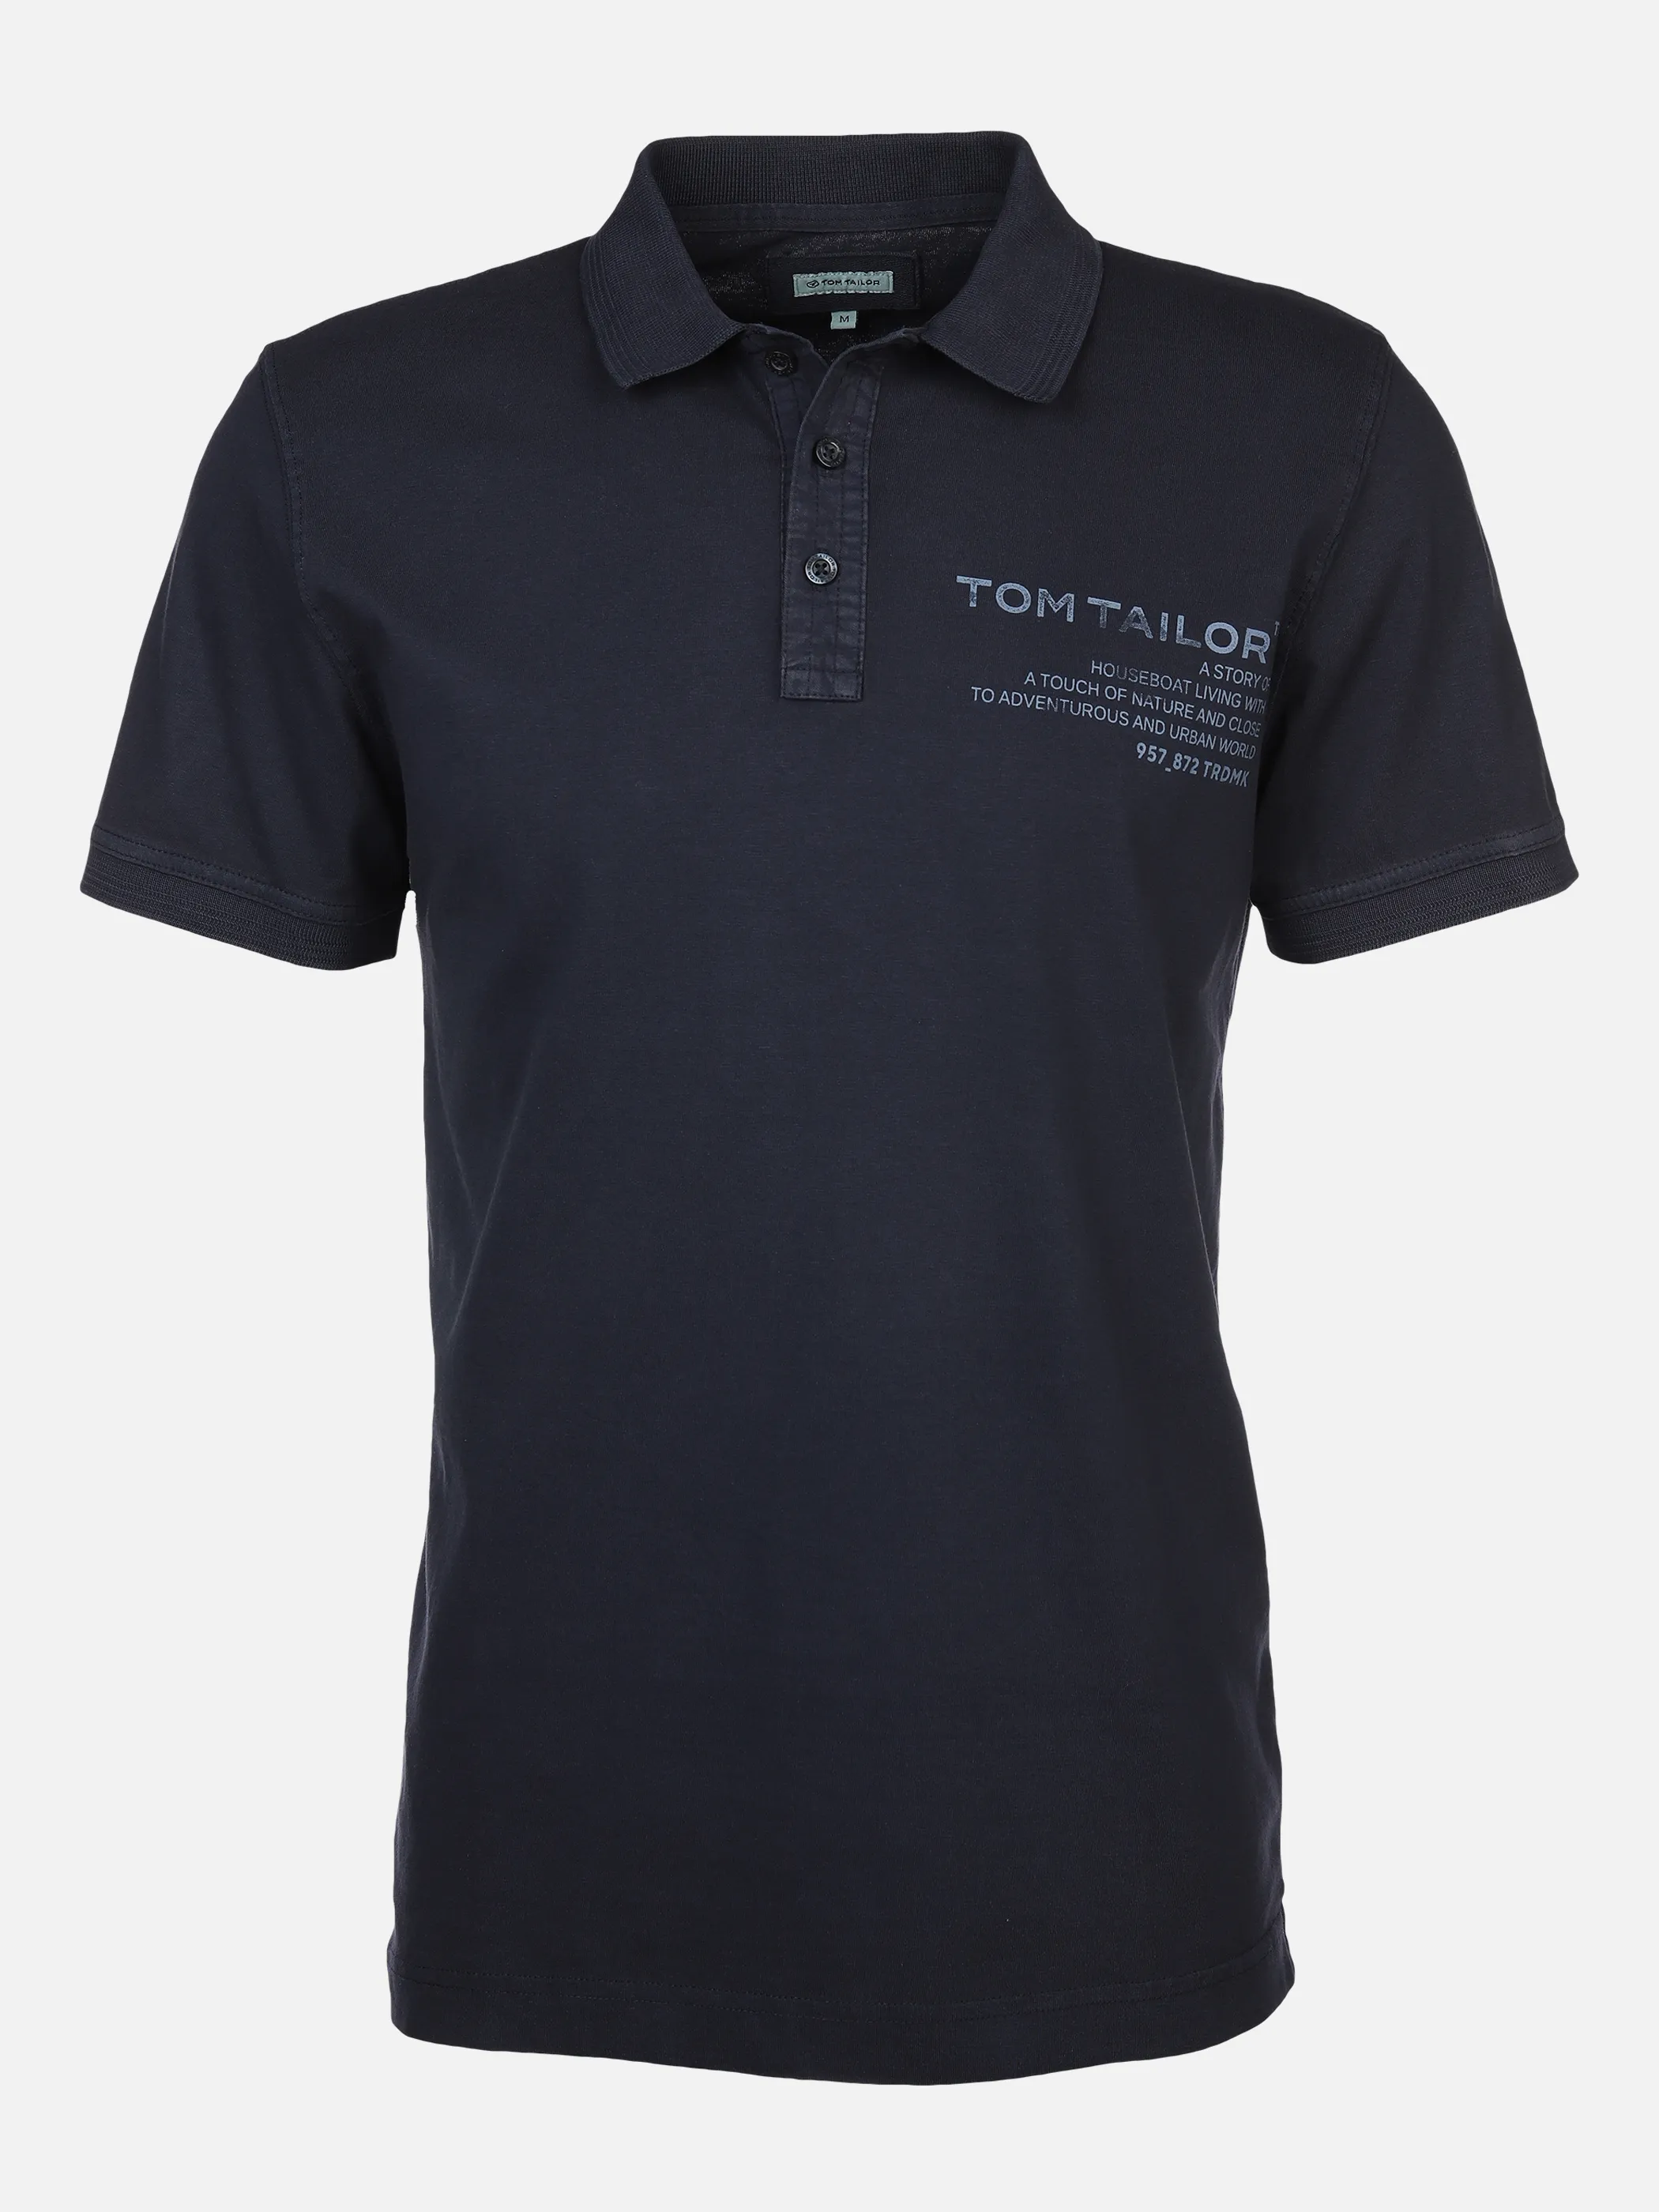 Tom Tailor 1035641 washed  polo Blau 874964 10668 1